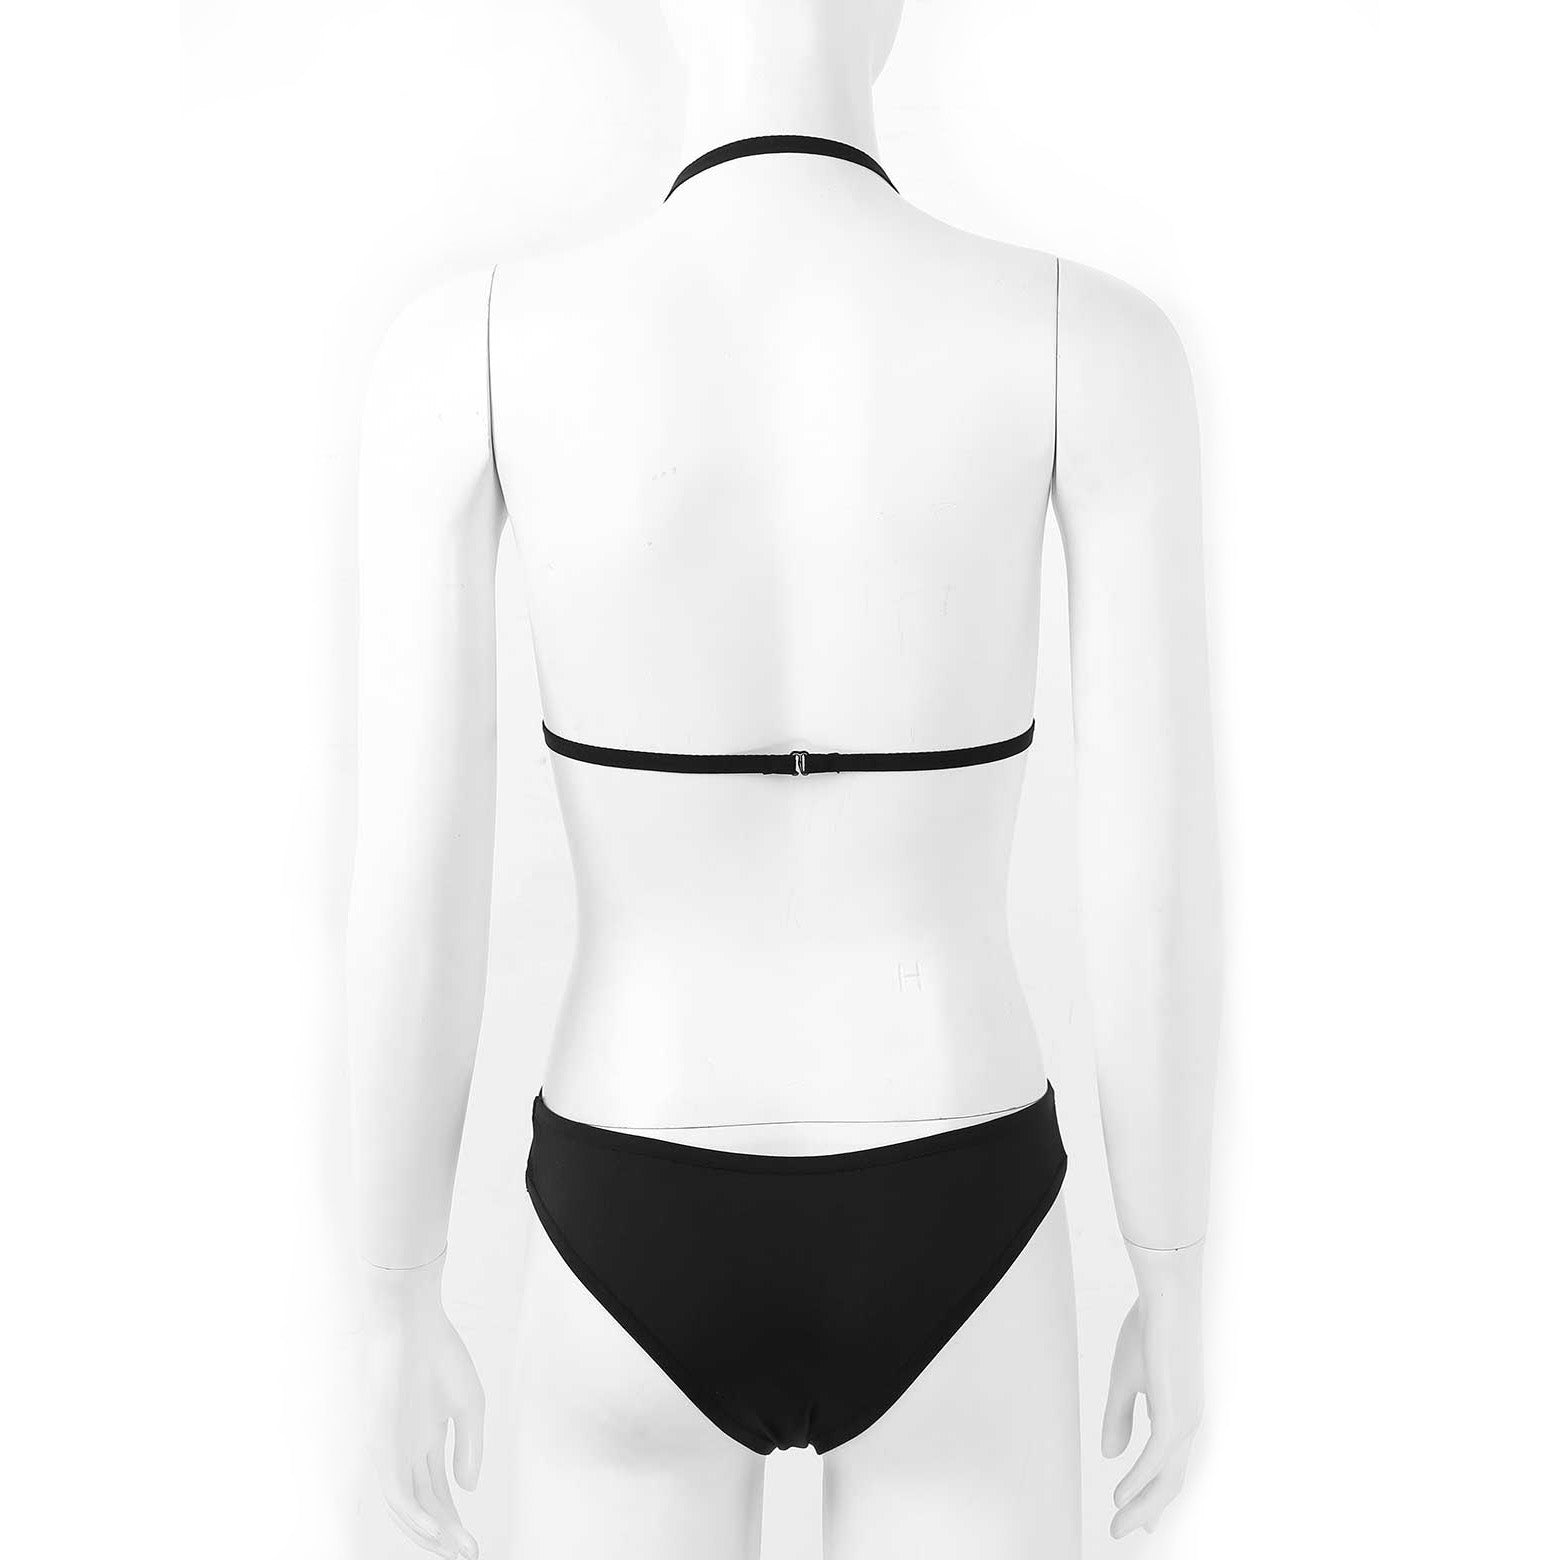 Hot Sexy Erotic Women Lingerie / Women's G-String Bodysuit / One-piece Swimsuit / Female Monokini - HARD'N'HEAVY